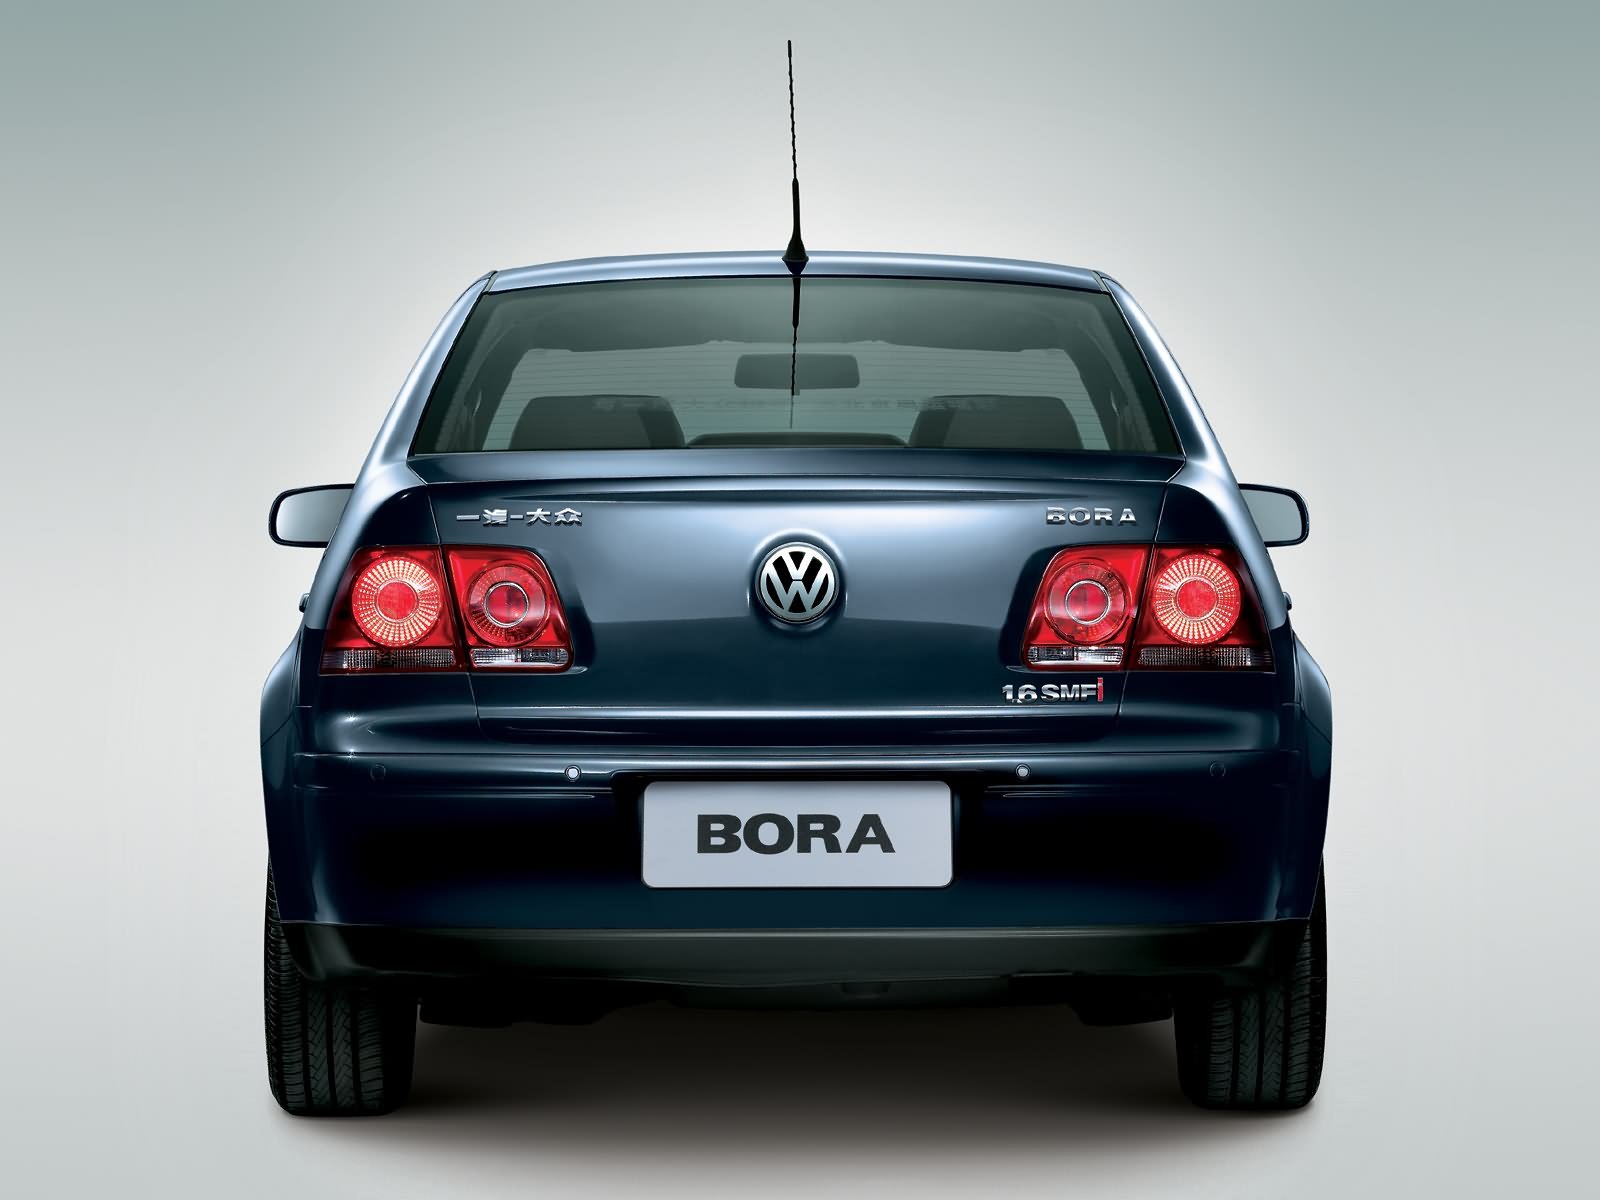 Volkswagen bora 1. VW Bora 2005. Фольксваген Бора 2007. Фольксваген Бора 2005. Фольксваген Бора 2006.